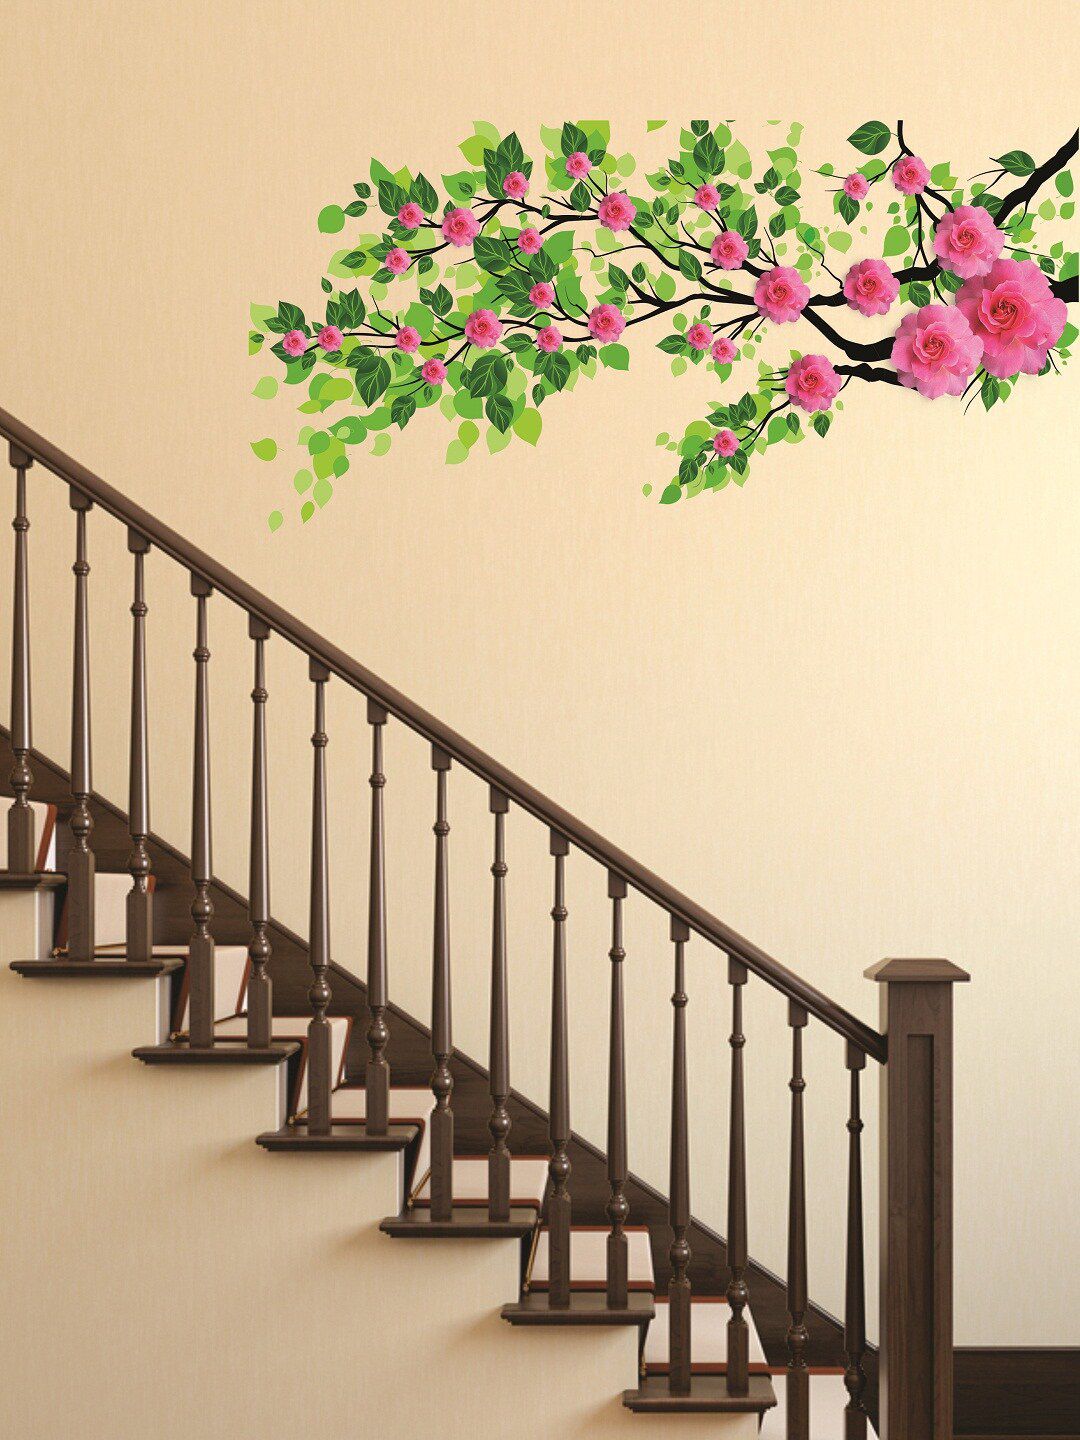 WALLSTICK Green & Rose Pink Floral & Botanical Large Vinyl Wall Sticker Price in India